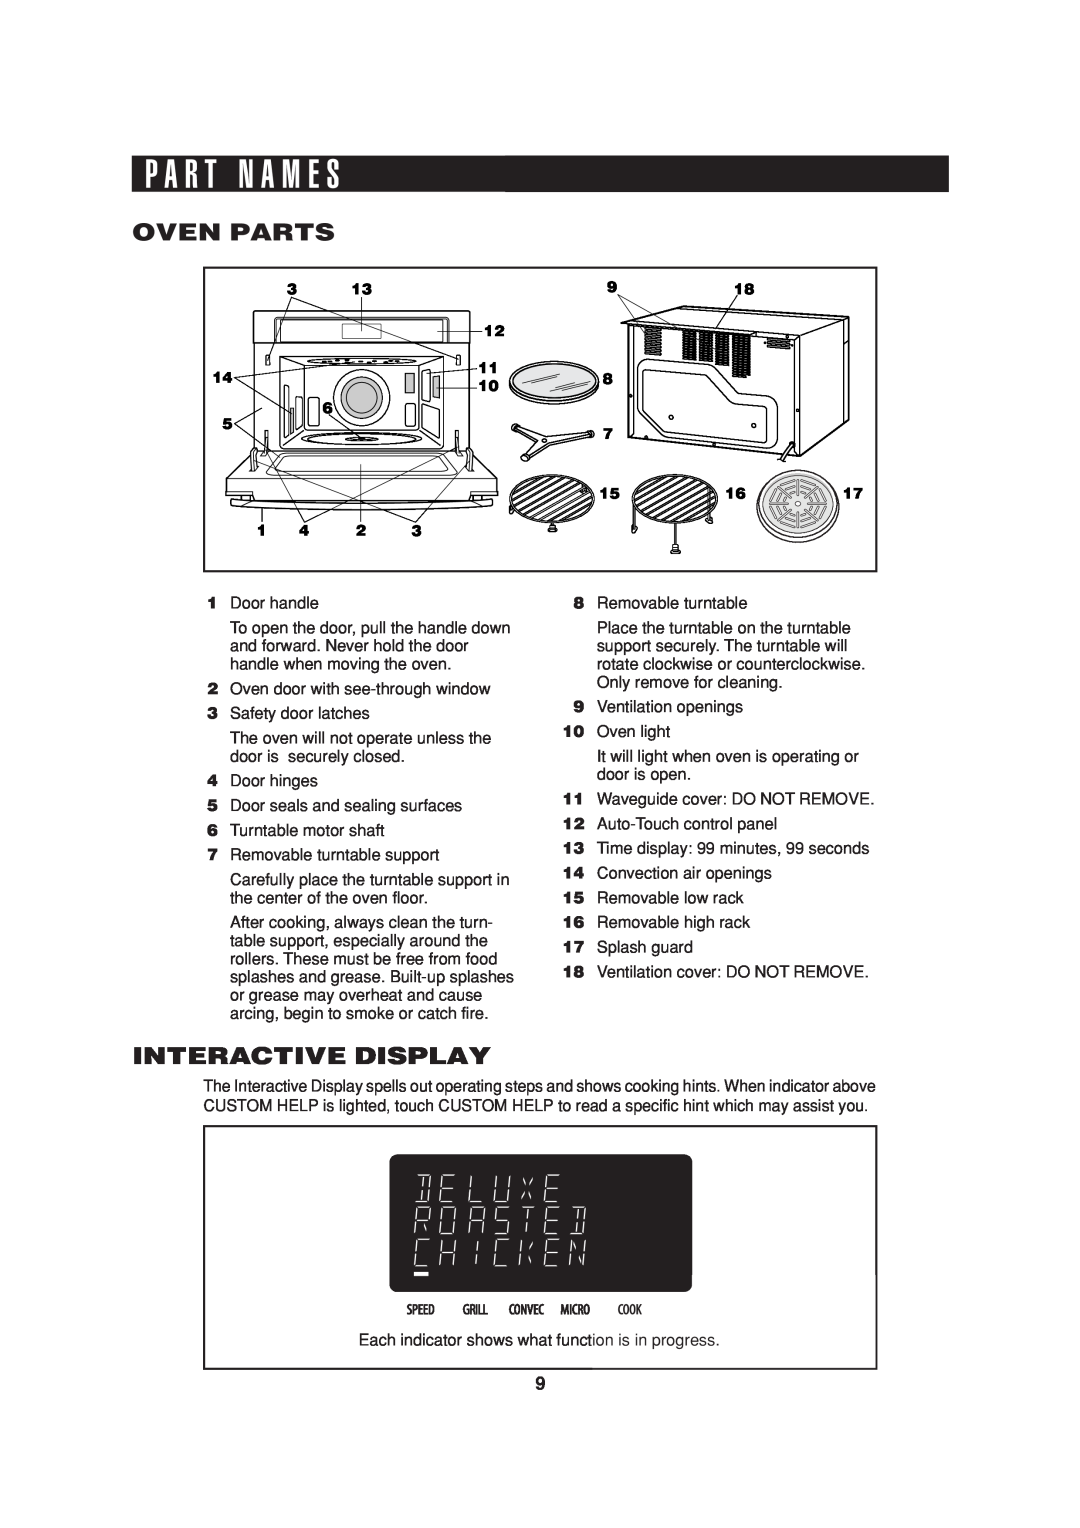 Sharp R-90GC operation manual P A R T N A M E S, Oven Parts, Interactive Display 